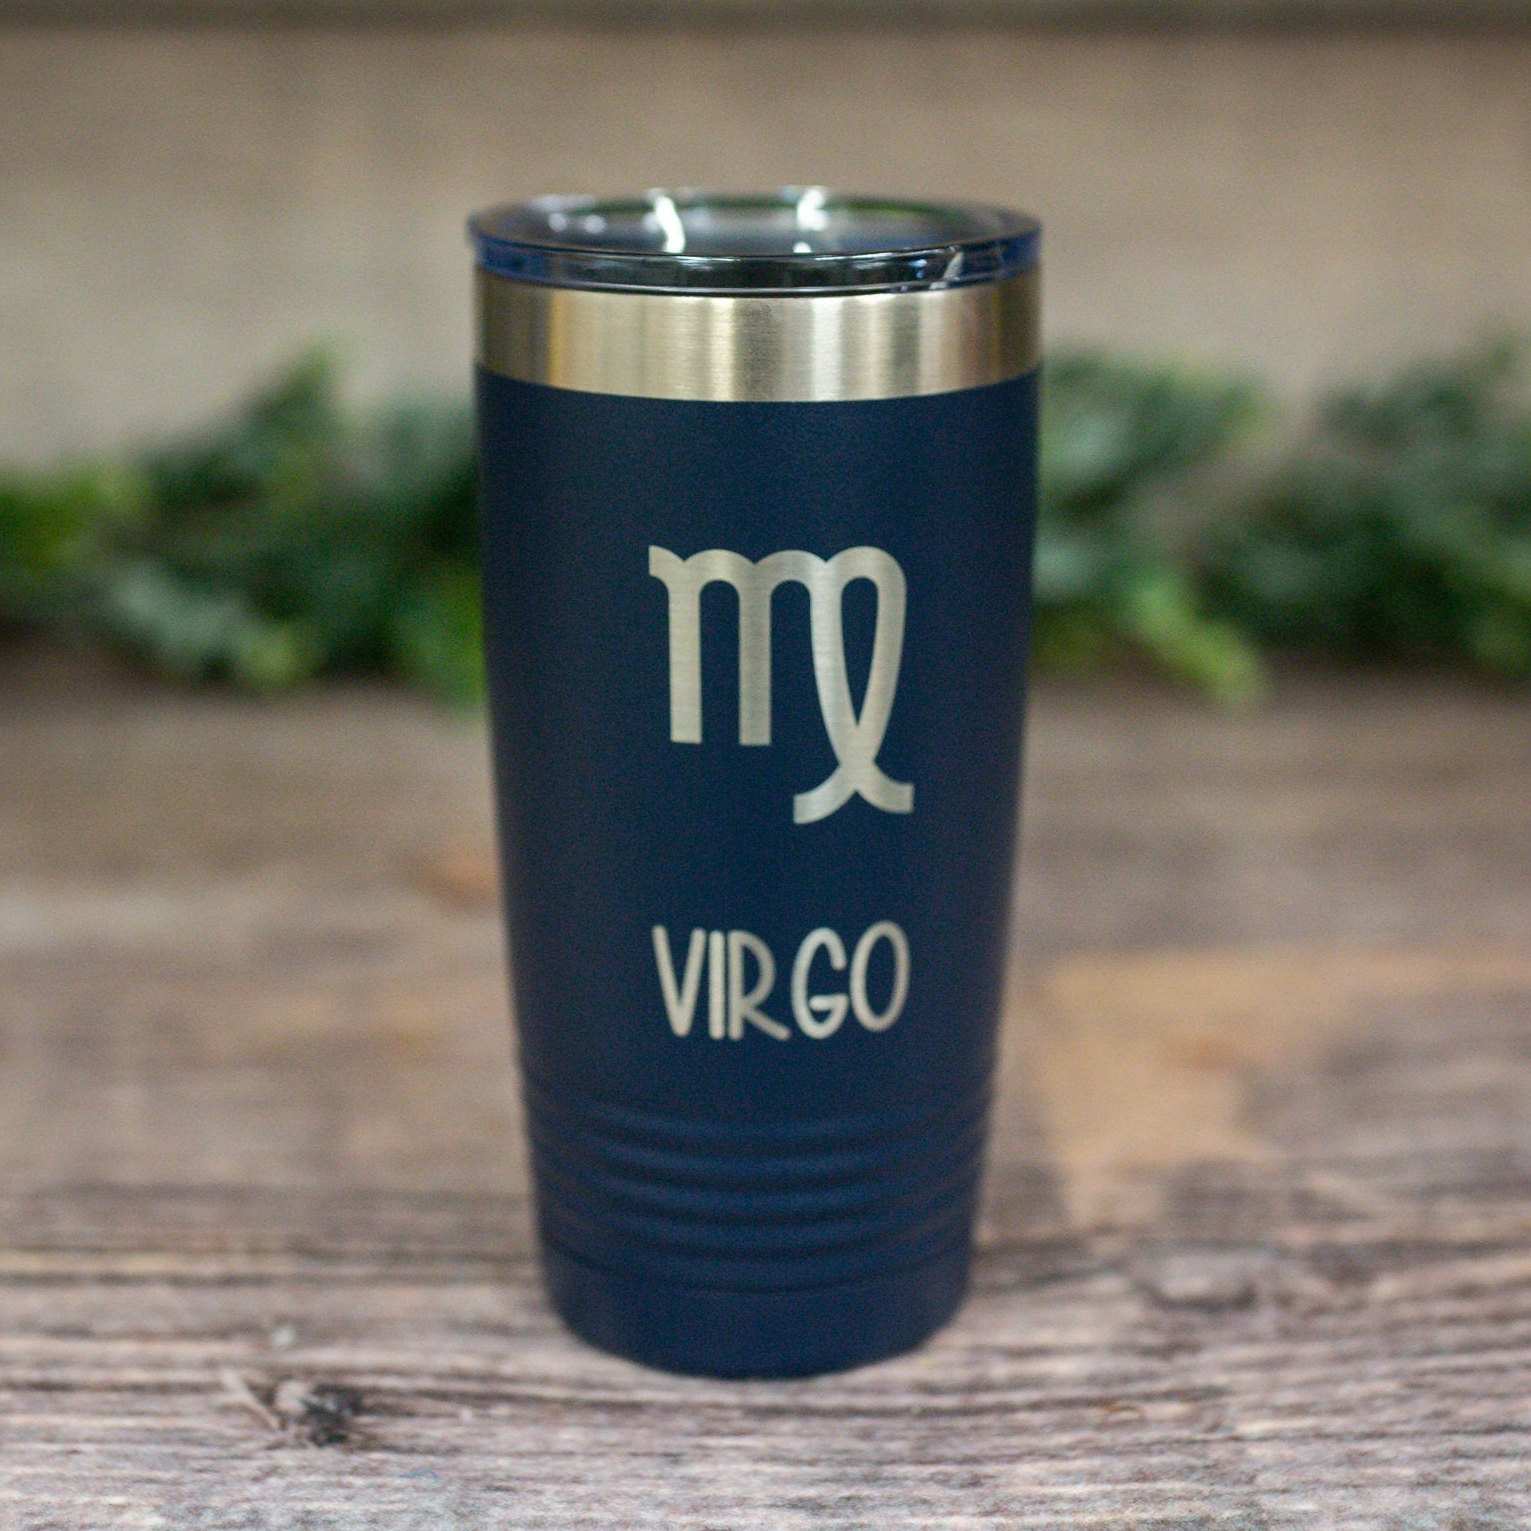 https://3cetching.com/wp-content/uploads/2021/07/virgo-engraved-coffee-mug-birthday-gift-astrology-mug-60f73cb5.jpg